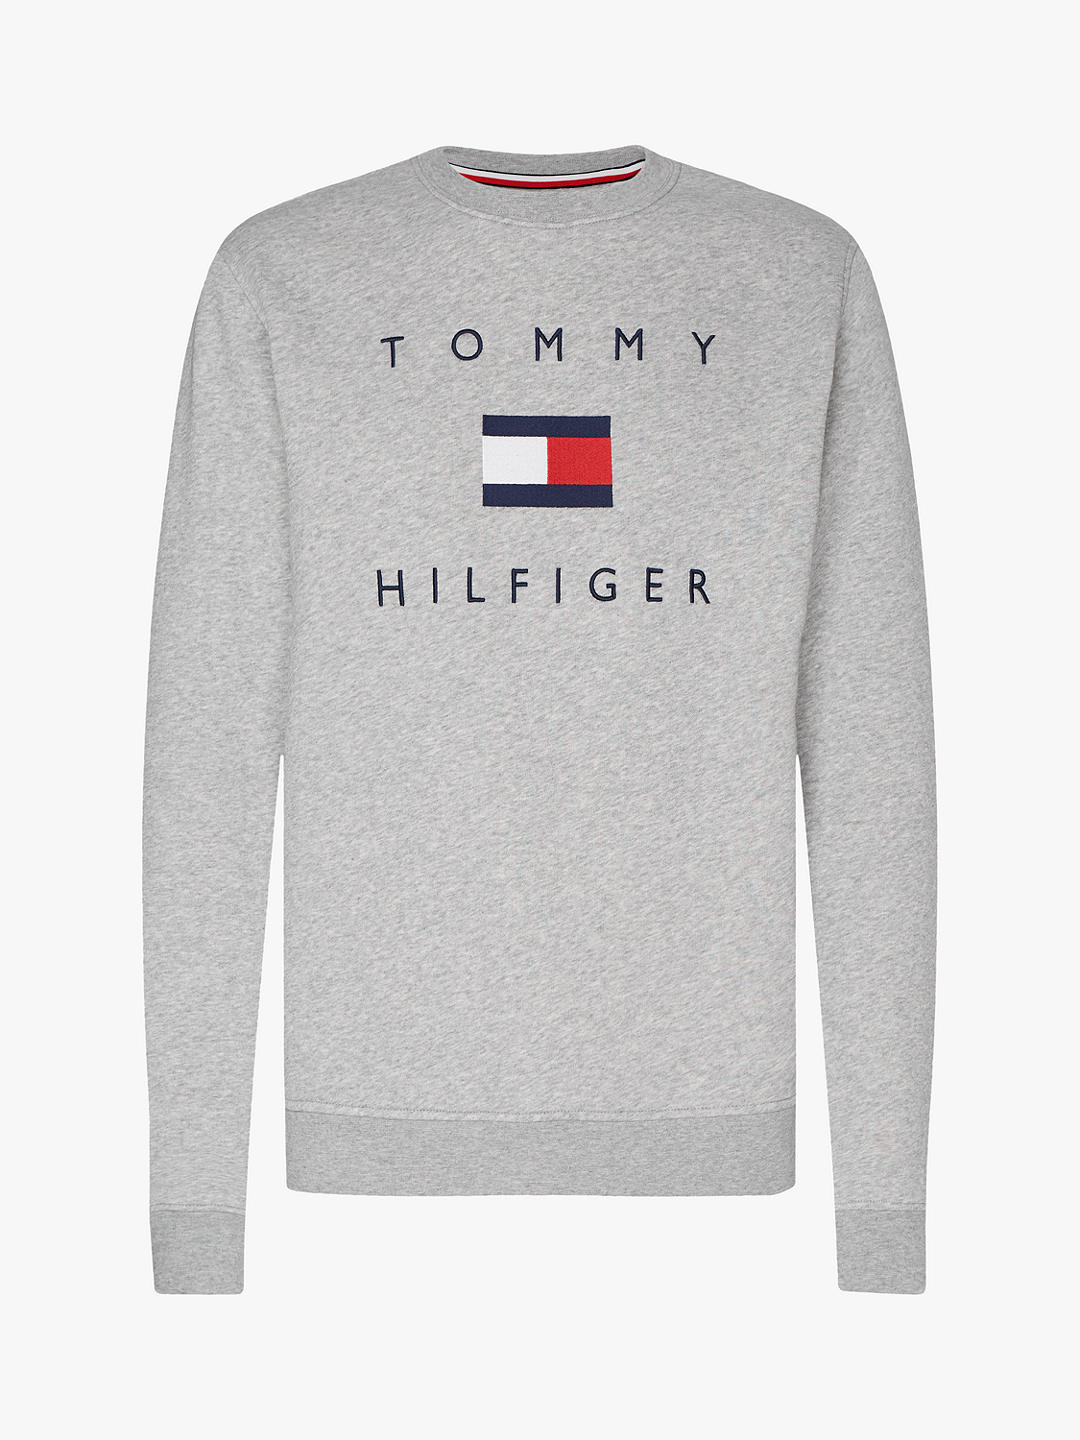 Tommy Hilfiger Flag Logo Sweatshirt, Medium Grey Heather at John Lewis ...